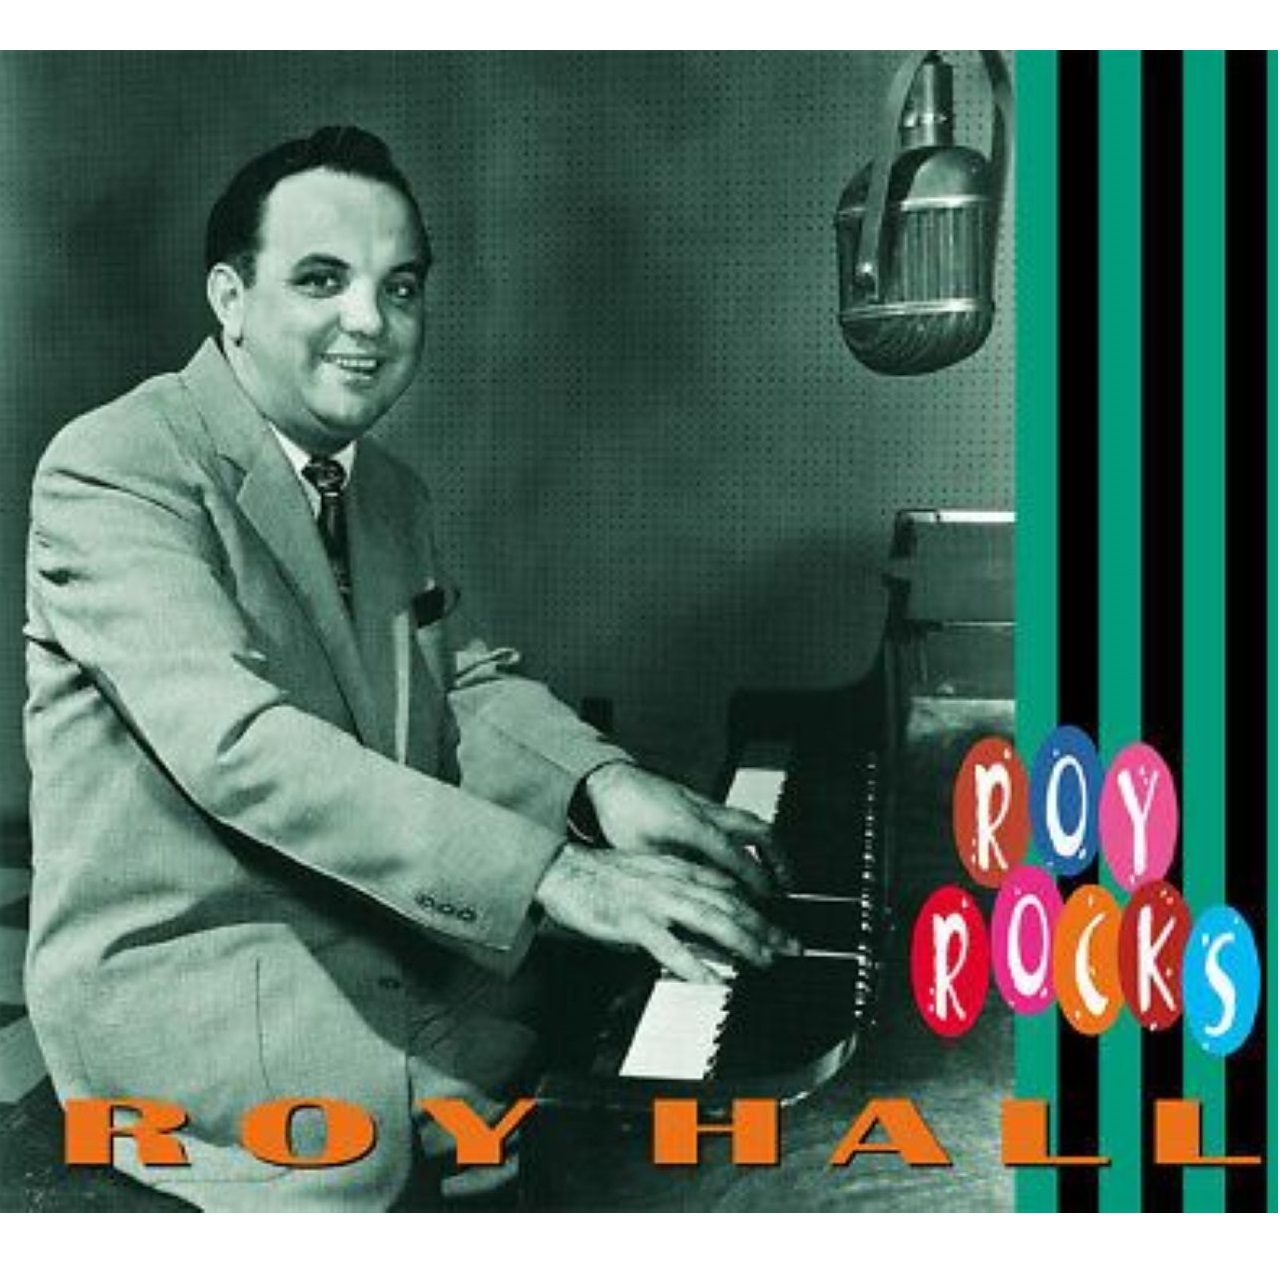 Roy Hall - Roy Rocks cover album